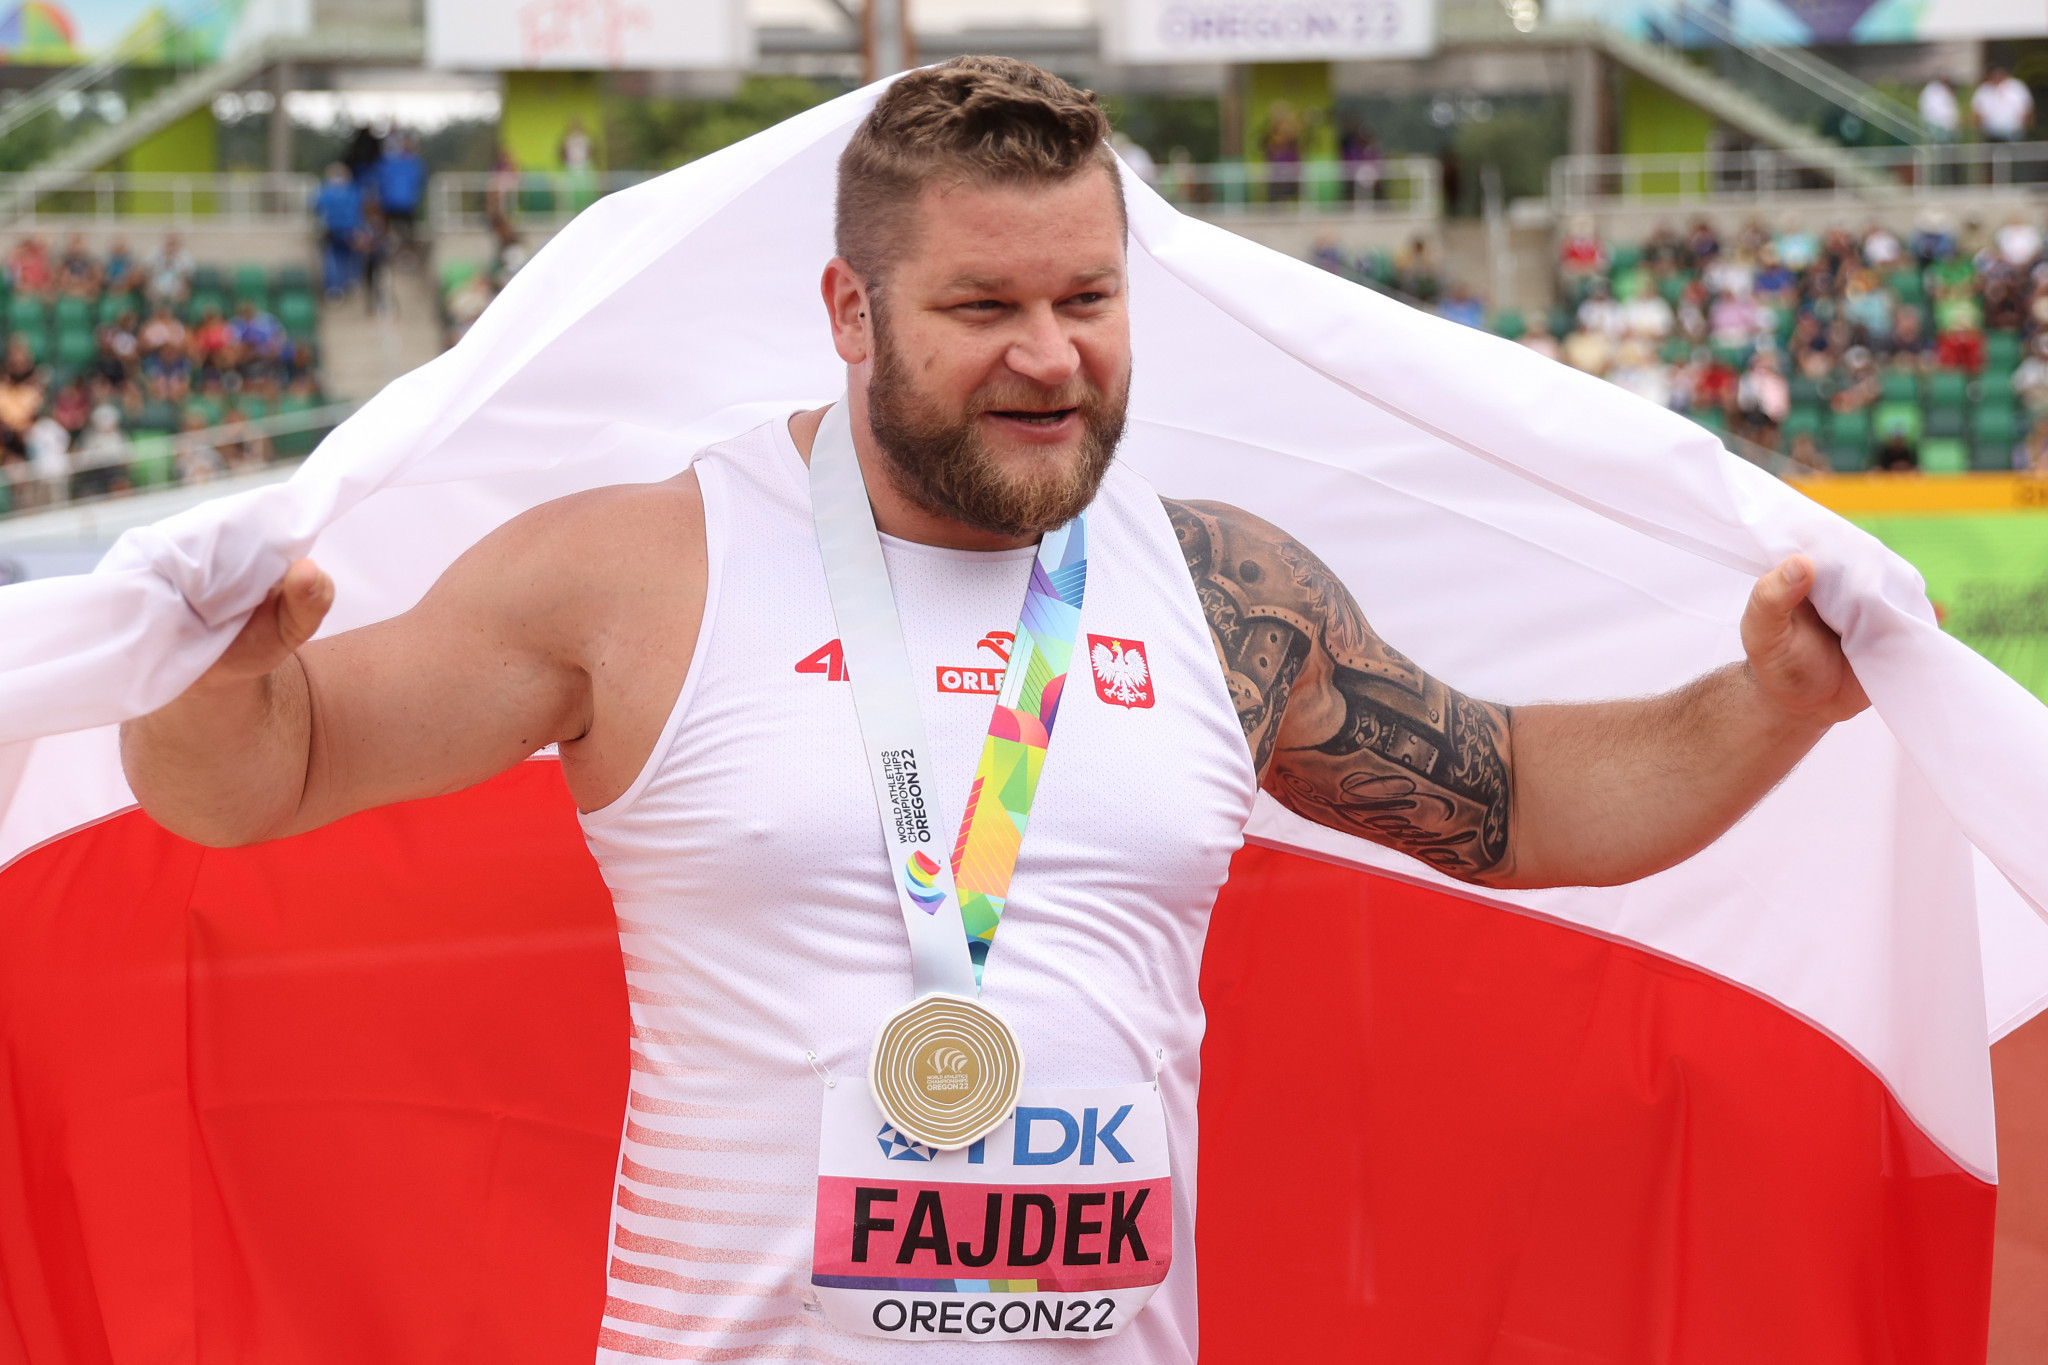 Pawel Fajdek wins record fifth consecutive World Athletics Championships gold medal in hammer